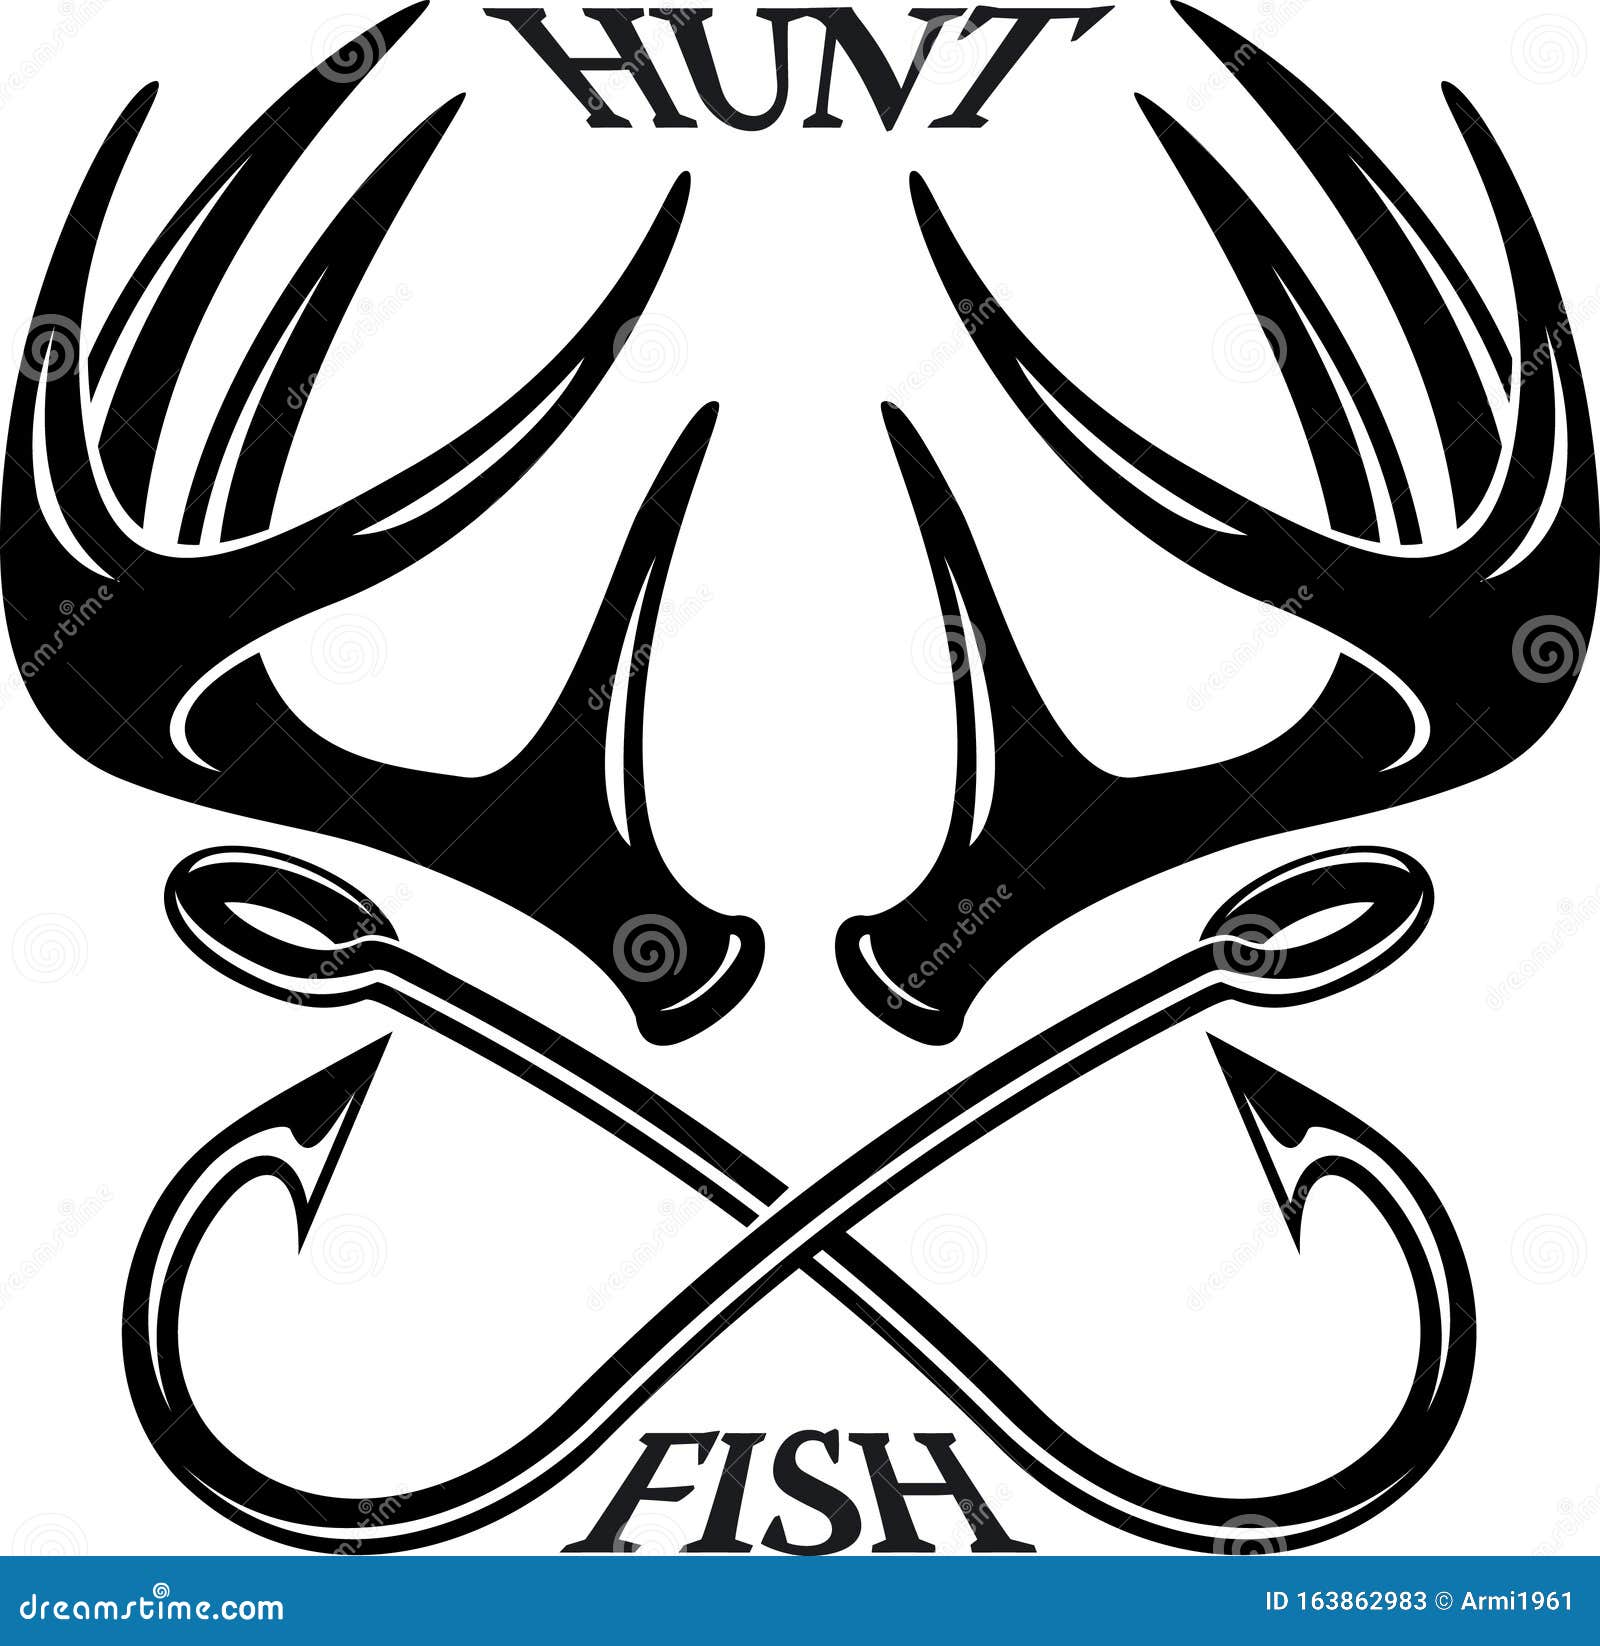 hunting and fishing emblem logo